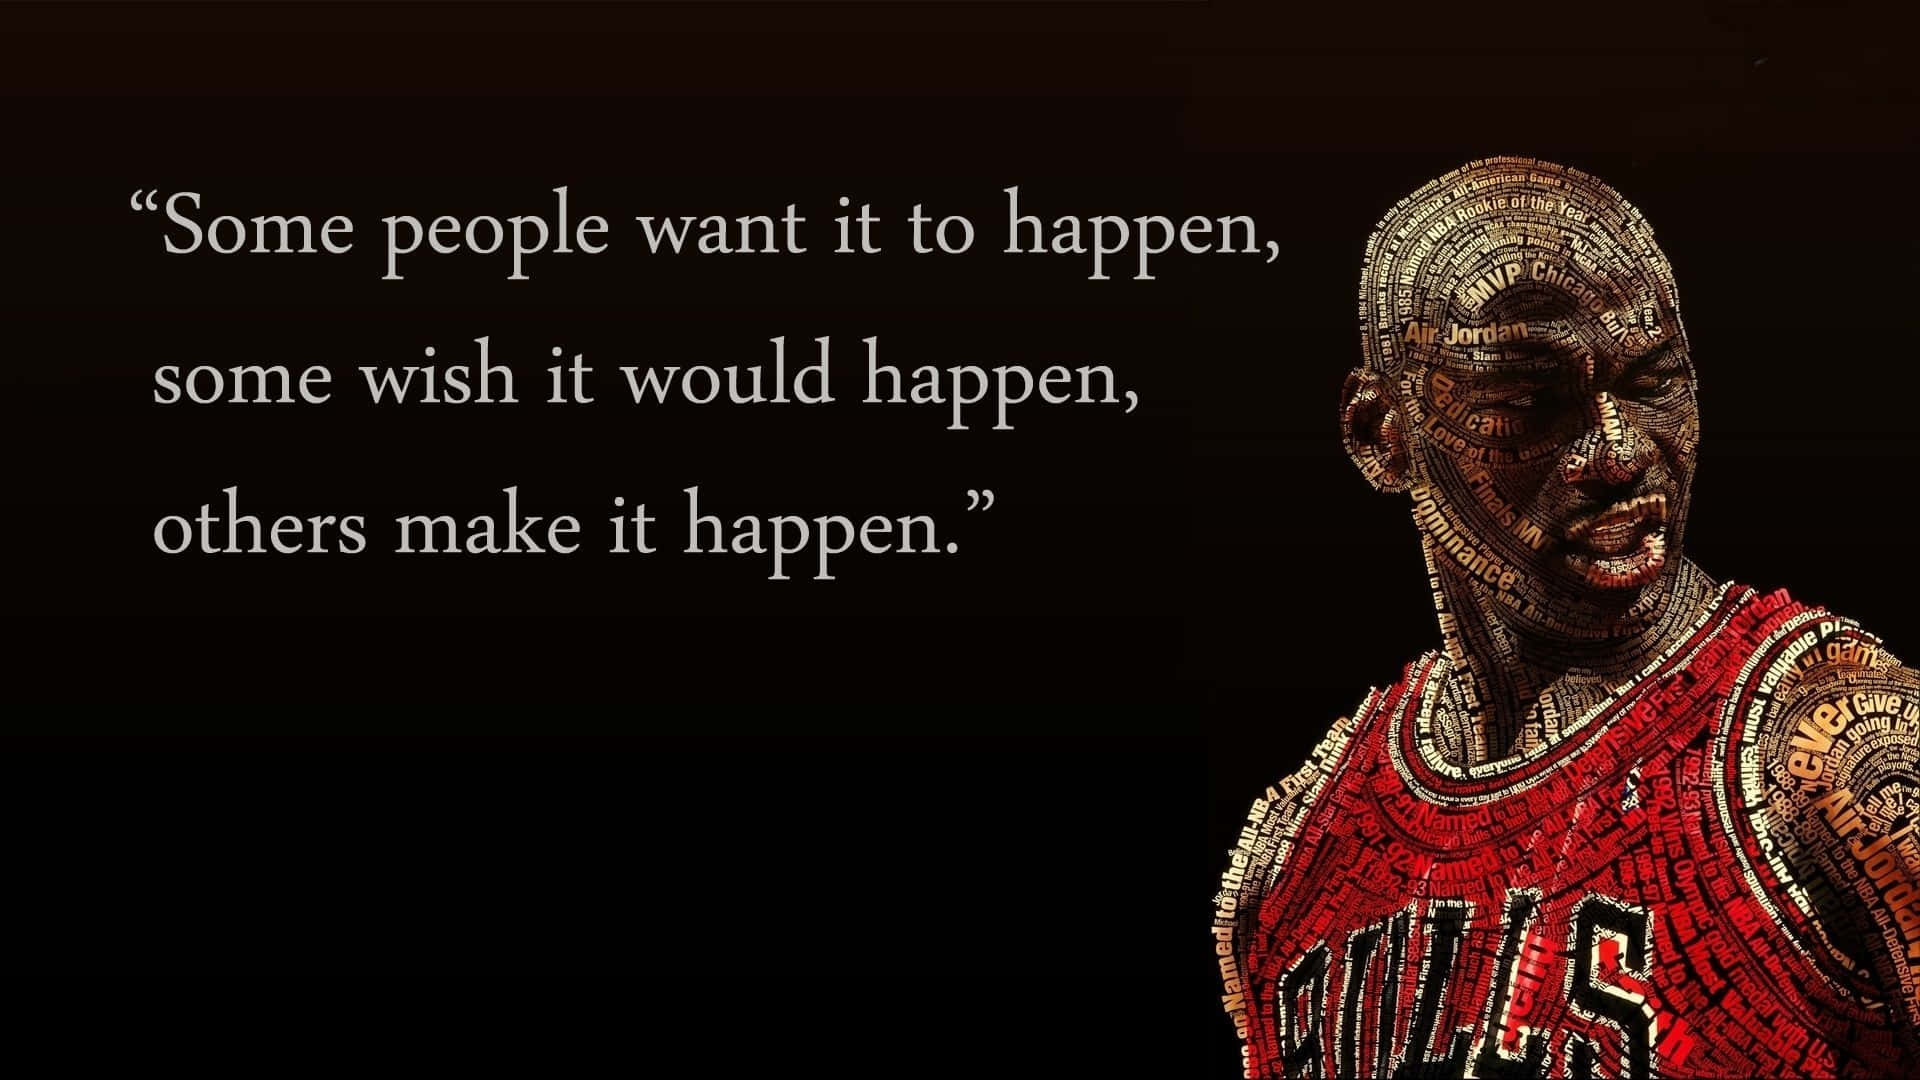 Inspirational Basketball Quote Mosaic Wallpaper